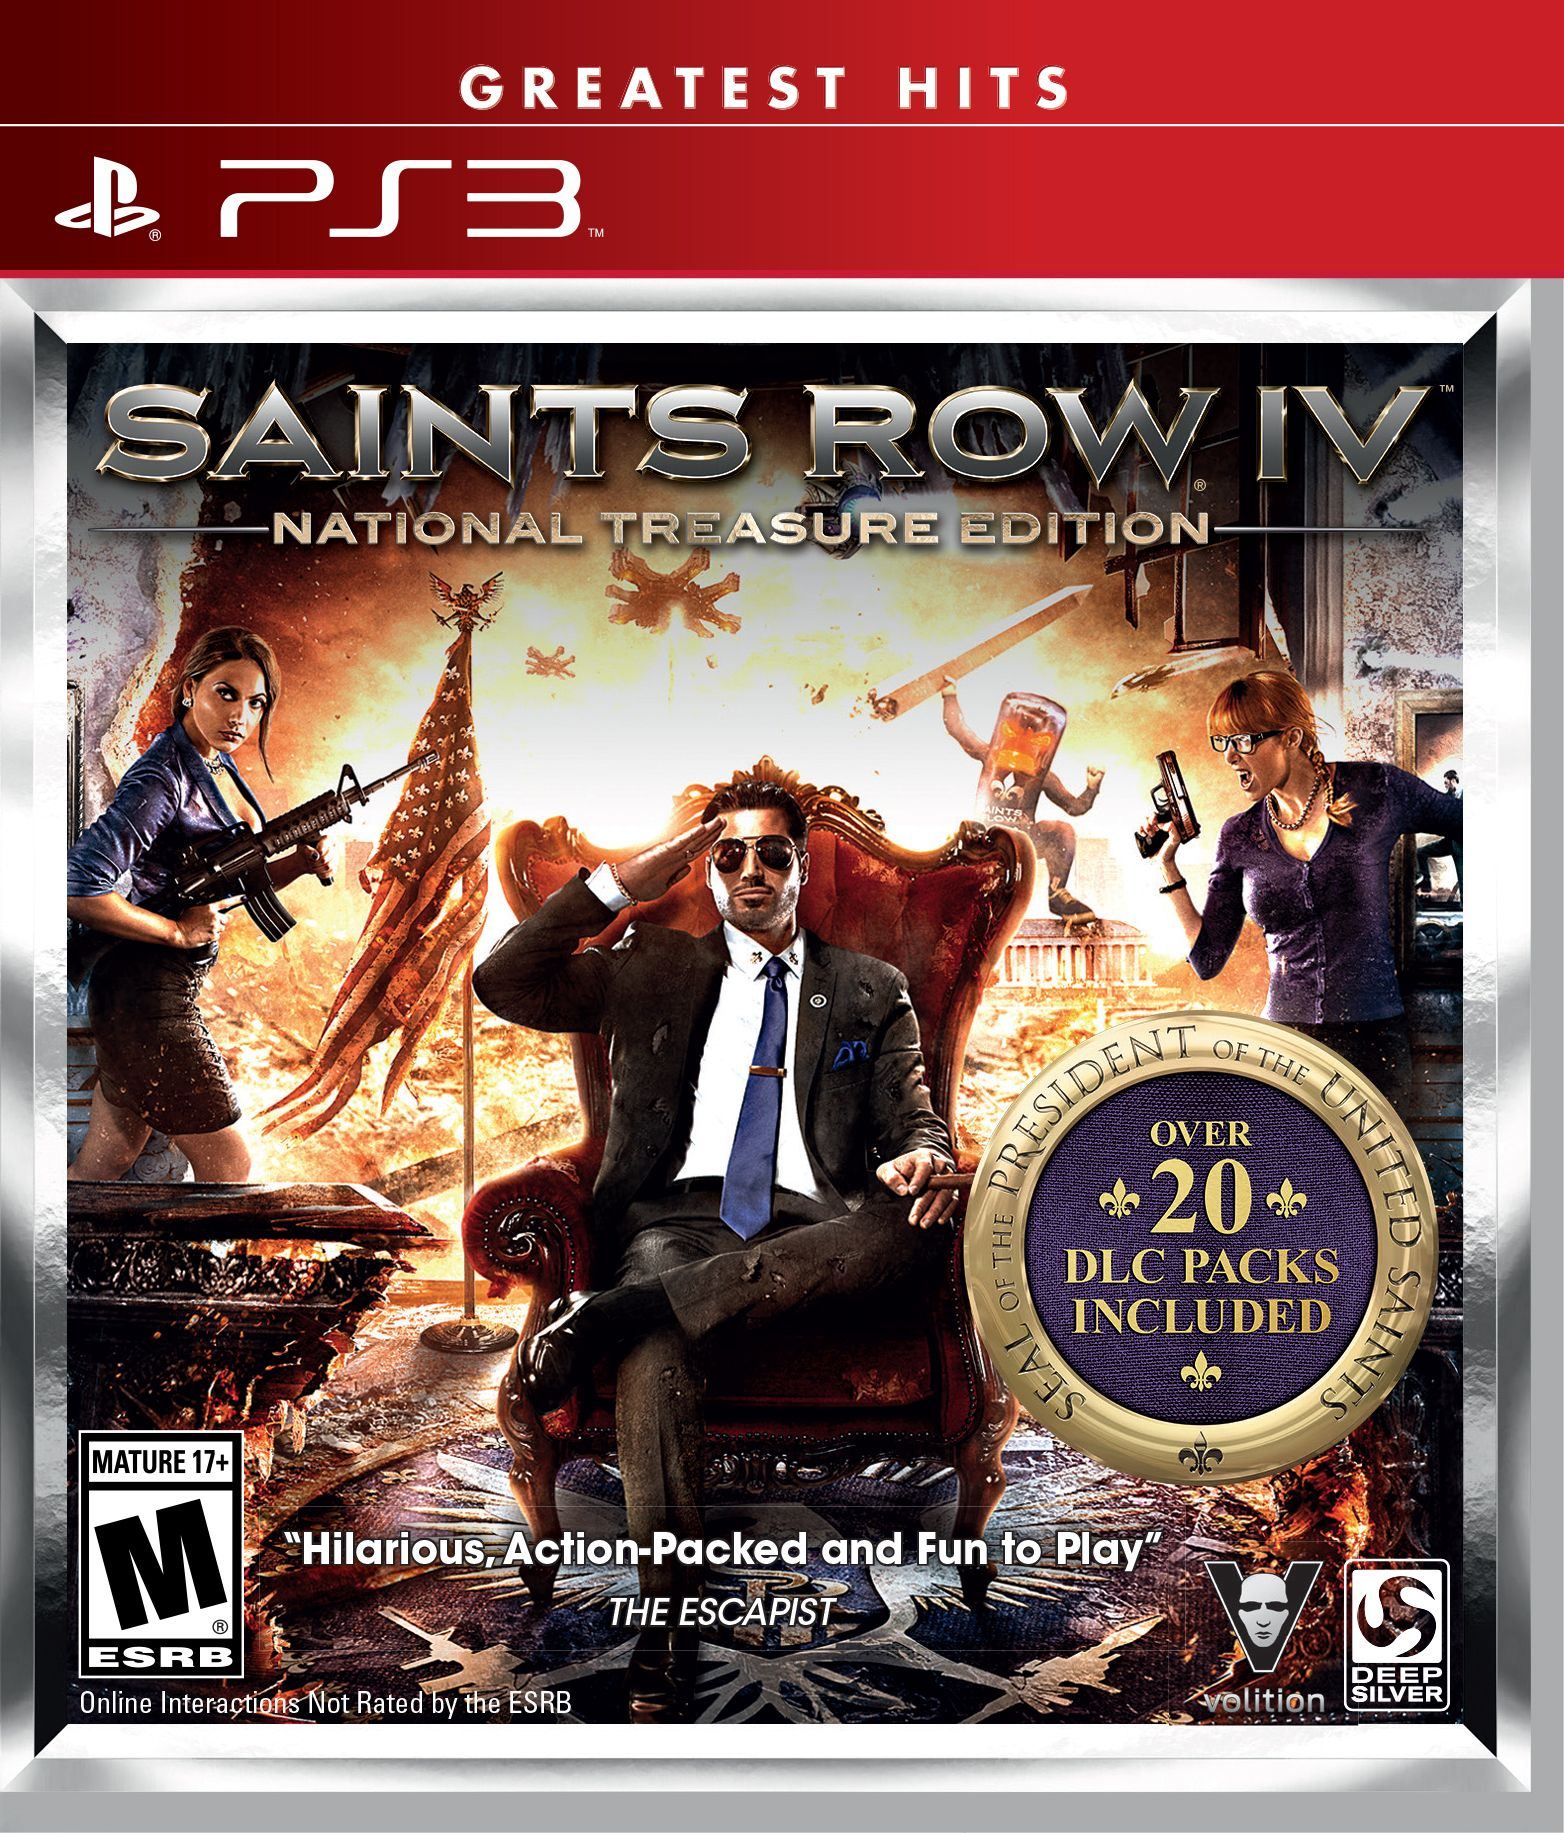 Super Adventures in Gaming: Saints Row (Xbox 360)